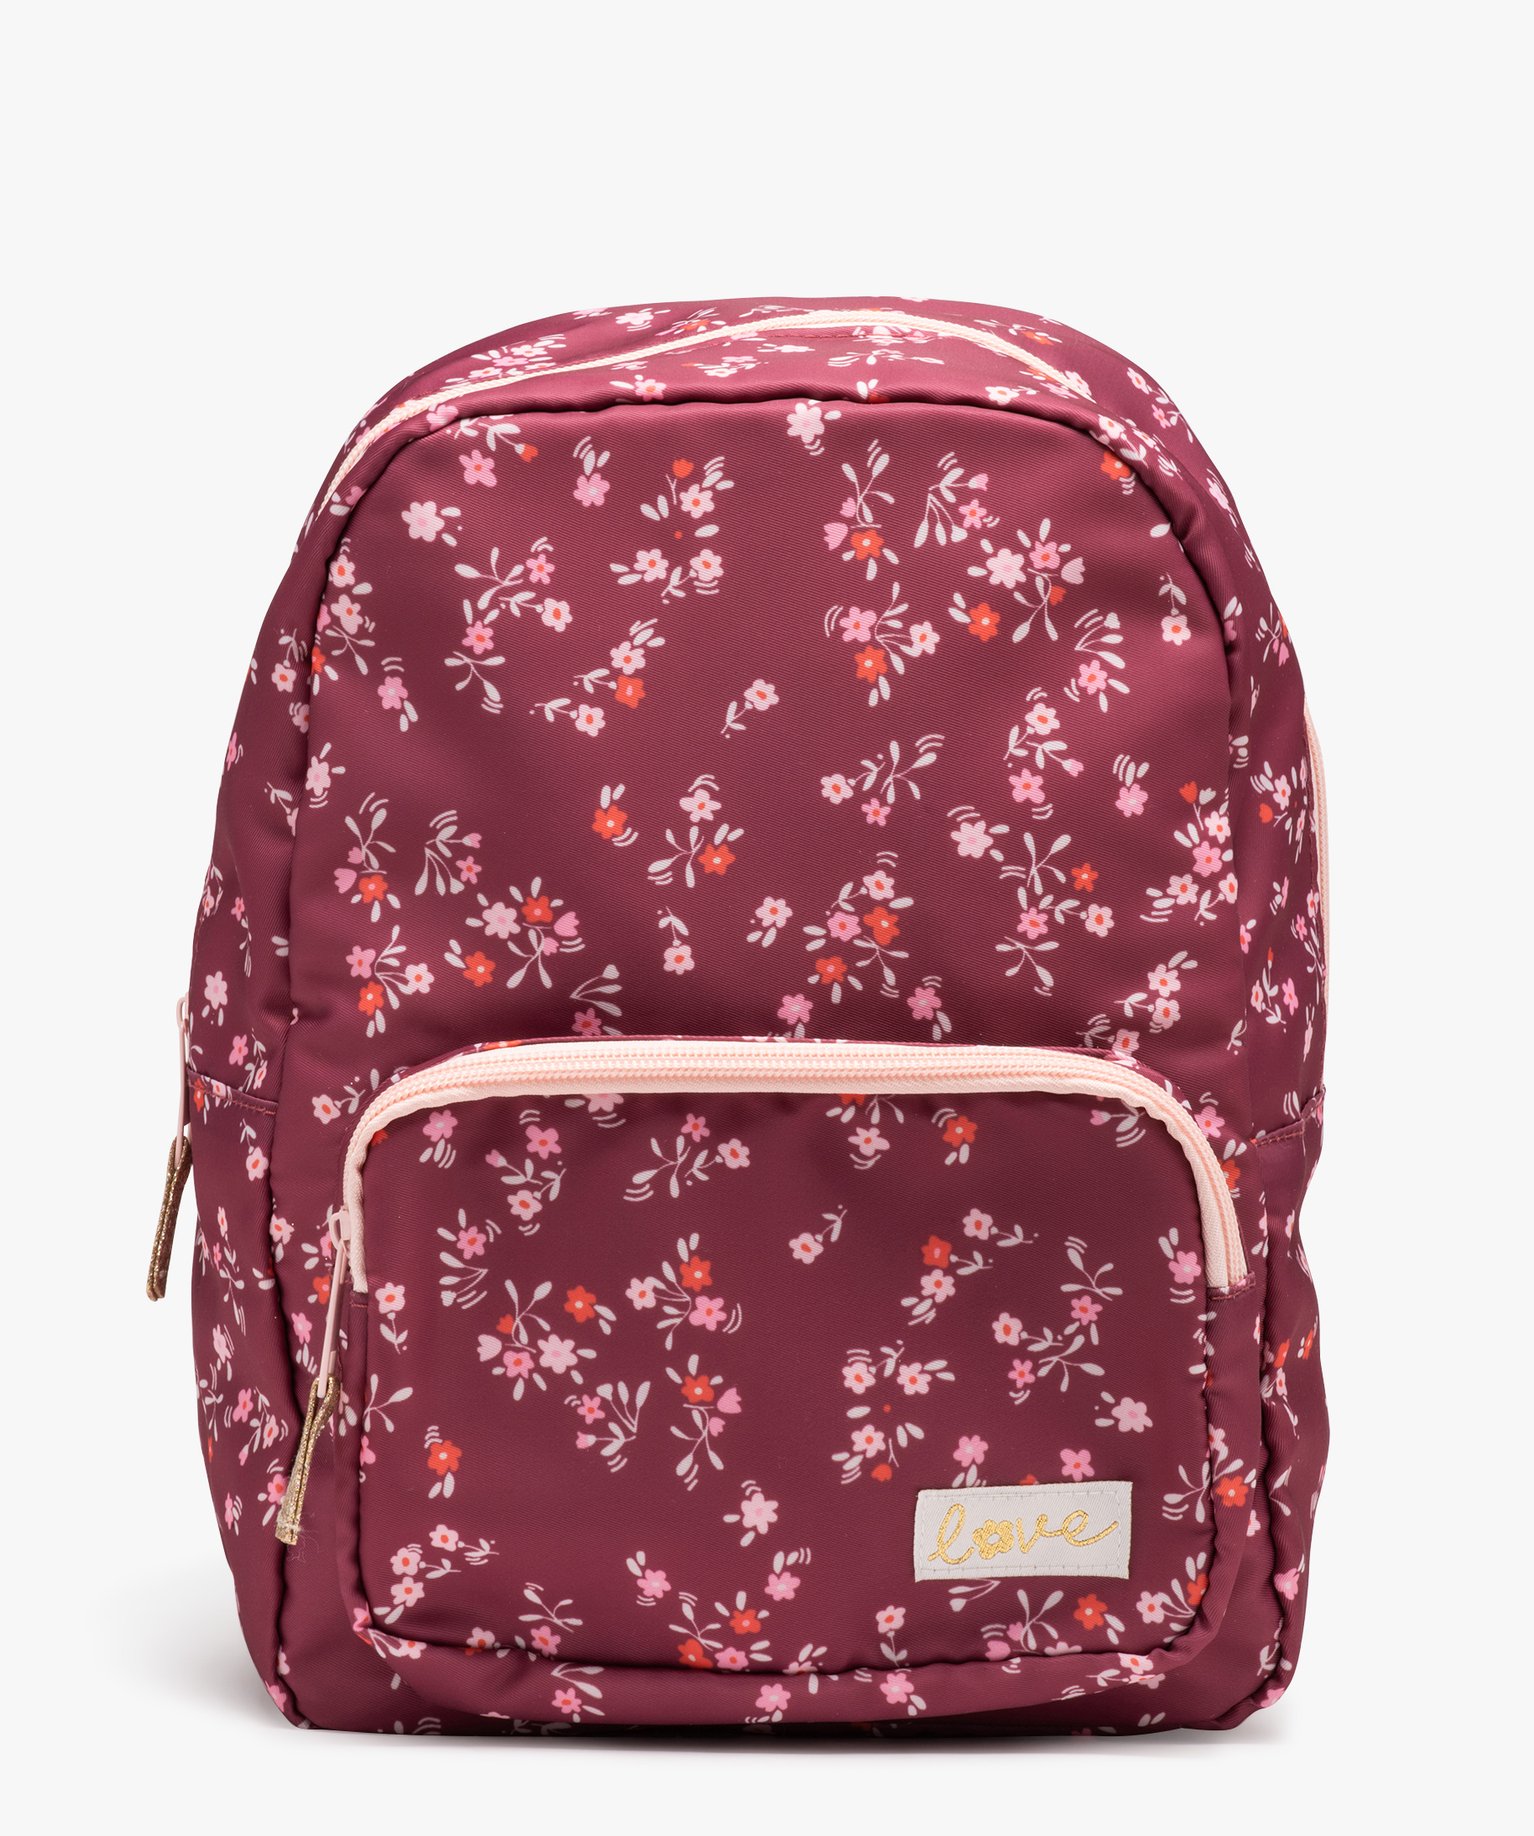 sac a dos en toile a motifs fleuris fille rose